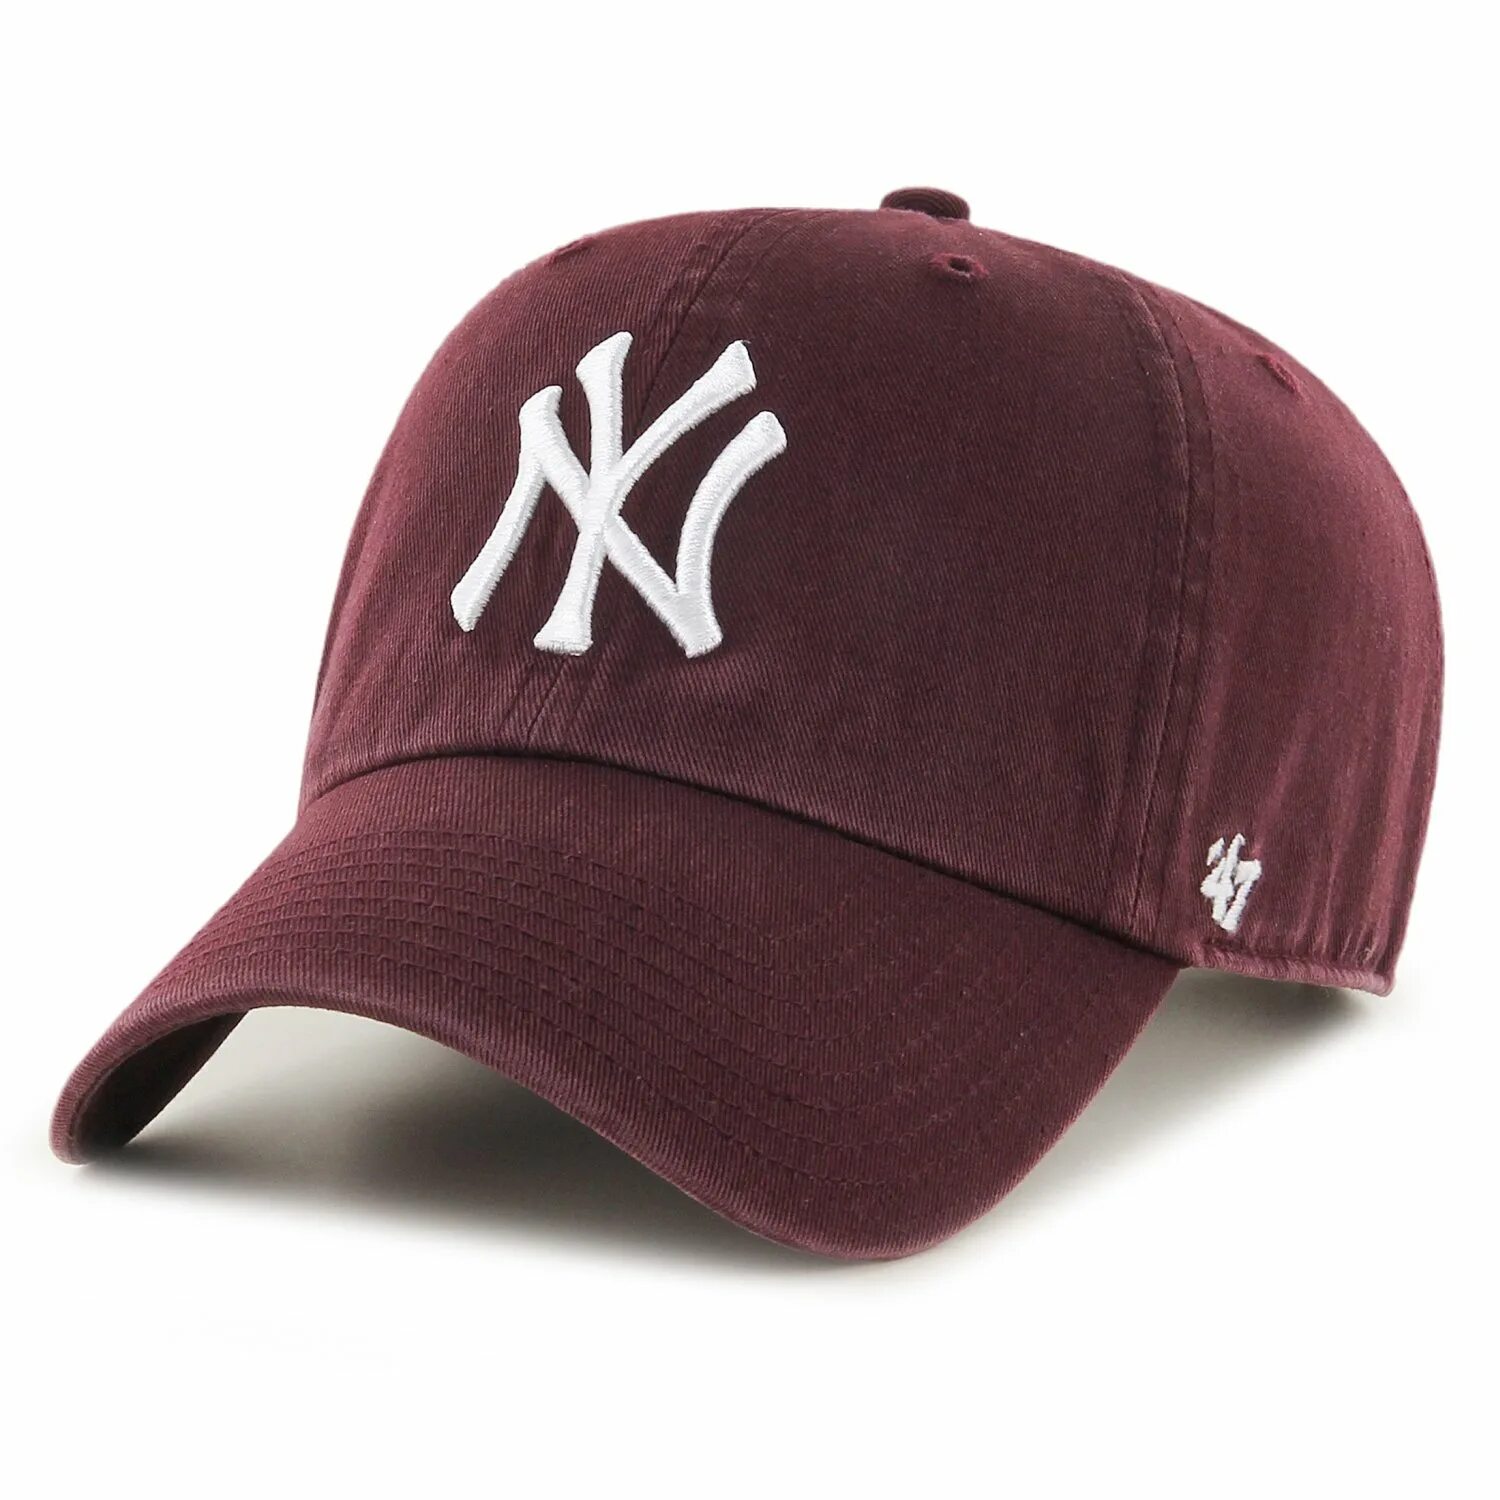 Кепка 47brand New York. 47brand - кепка NY Yankees. Бейсболка мужская New era MLB New York Yankees. Кепка MLB New York.